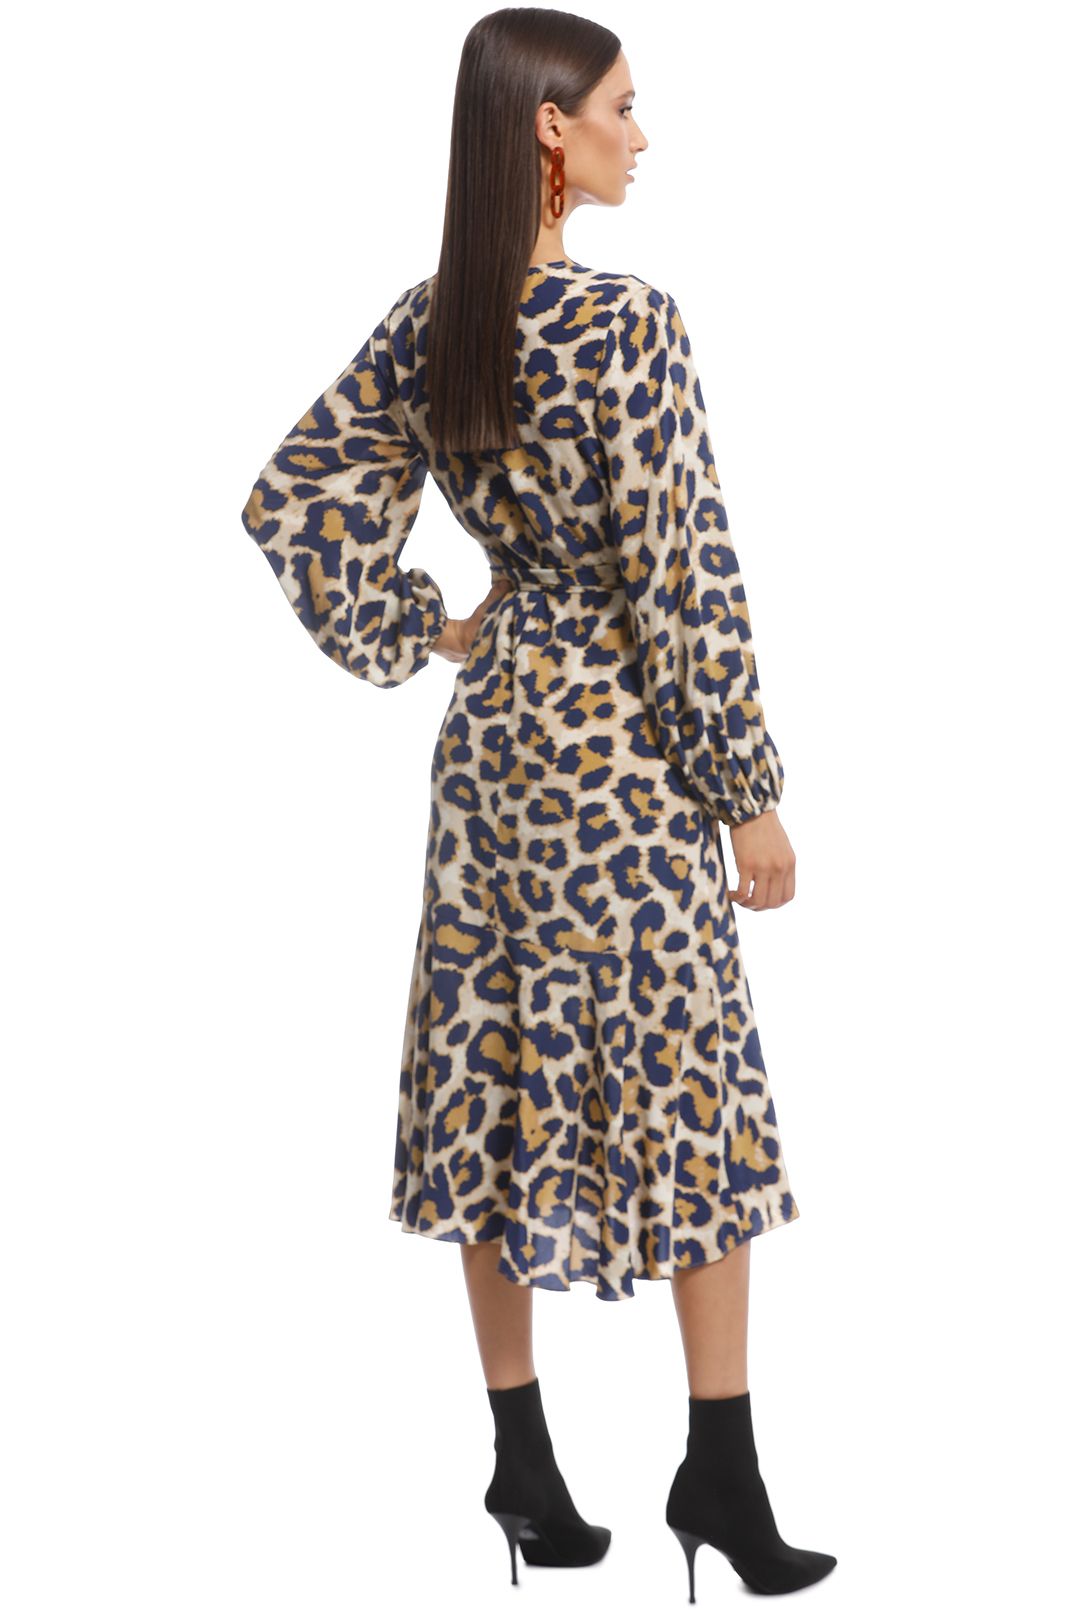 Husk - Talitha Dress - Leopard - Back